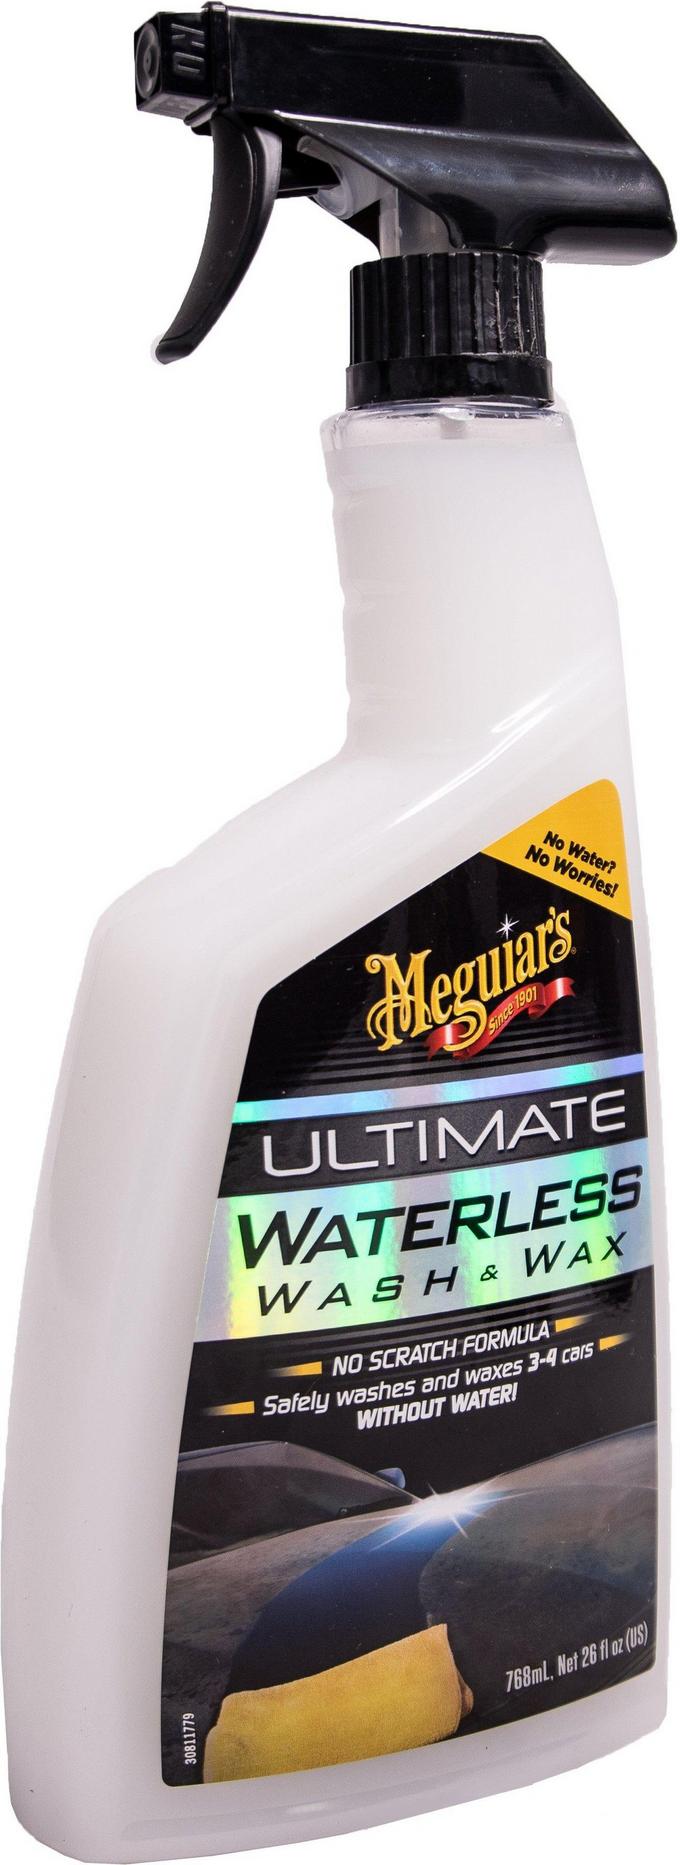 Ultimate Waterless Wash & Wax.mp4, car wash, towel, water, motor car